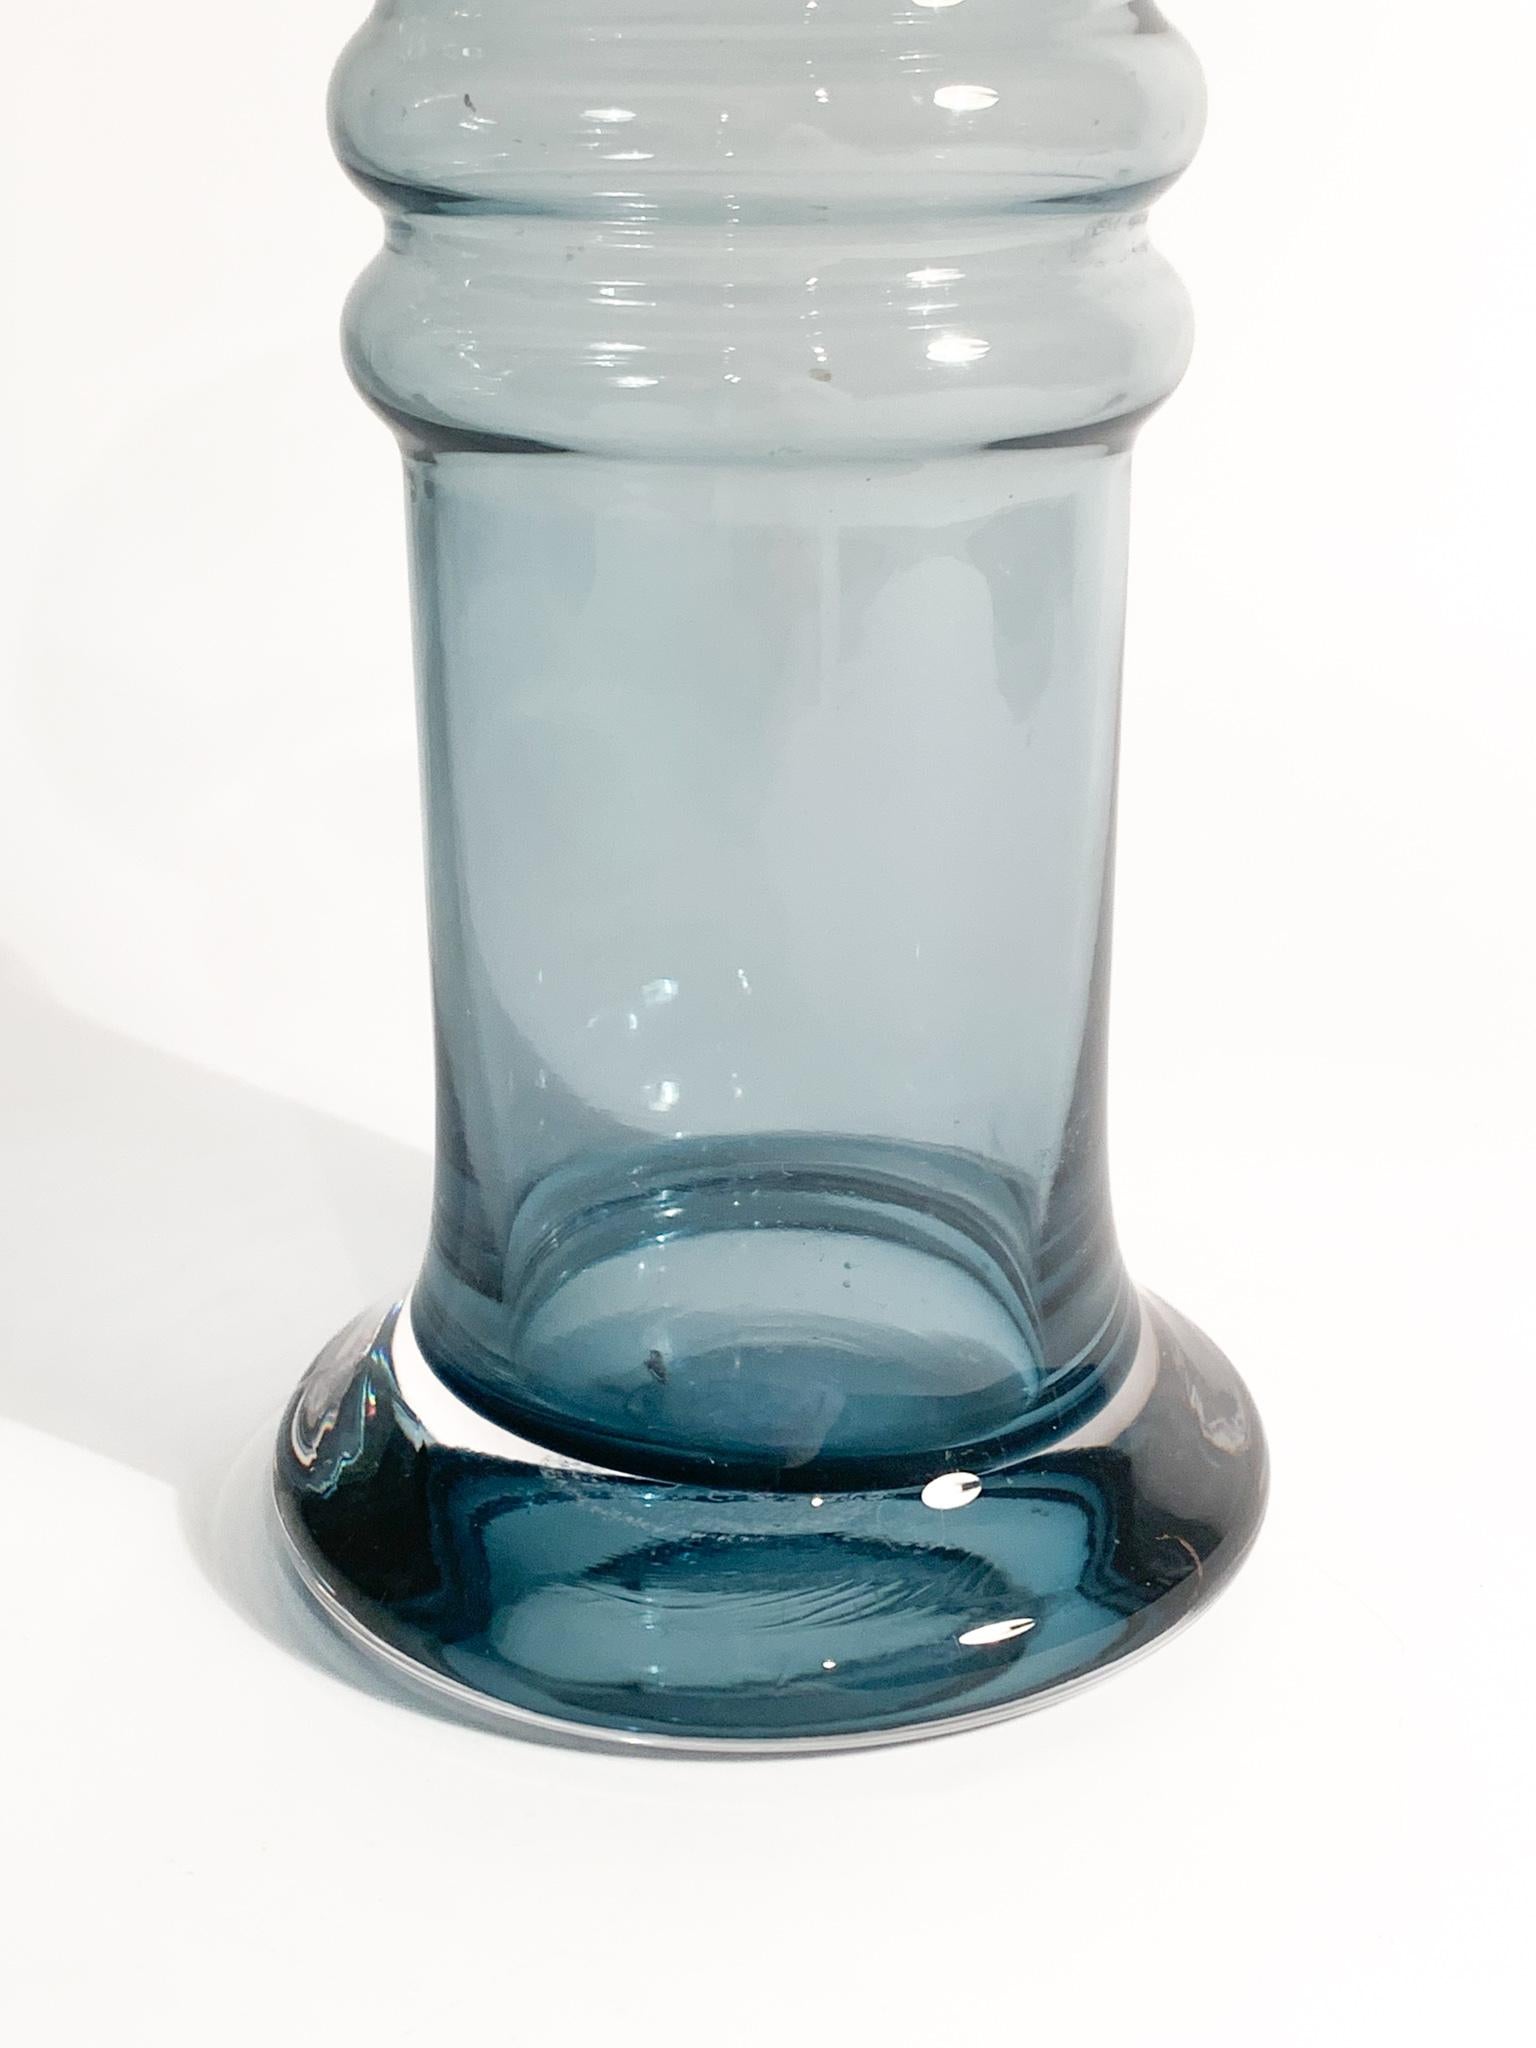 Mid-20th Century 'Kielo' Vase in Finnish Glass Designed by Tamara Aladin for Riihimäki 1960s For Sale